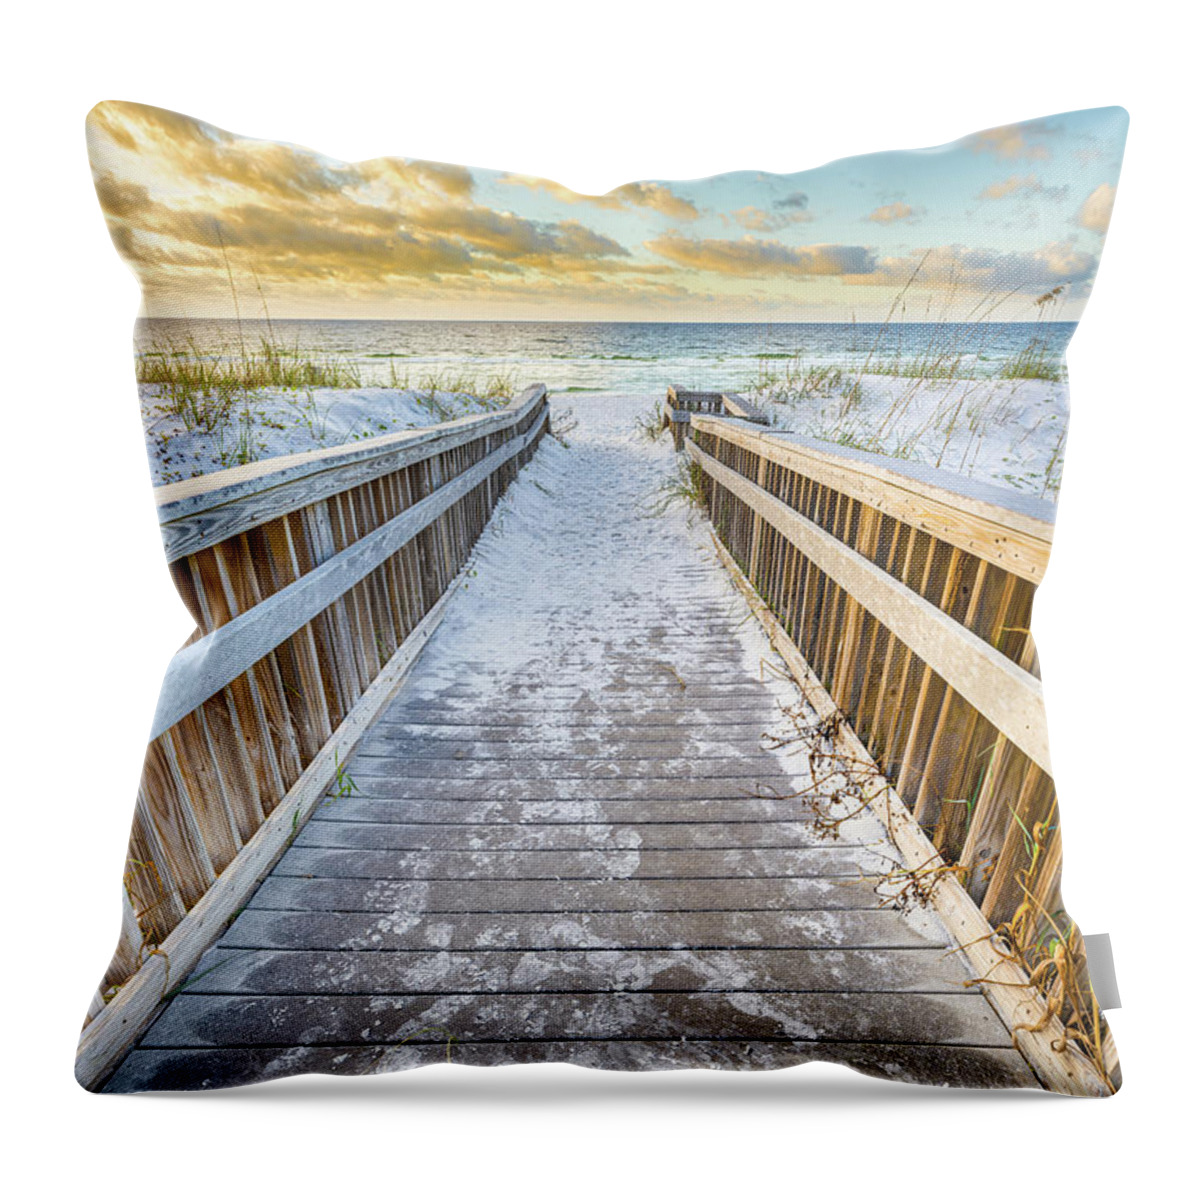 Beach Throw Pillow featuring the photograph Path To The Beach by Jordan Hill